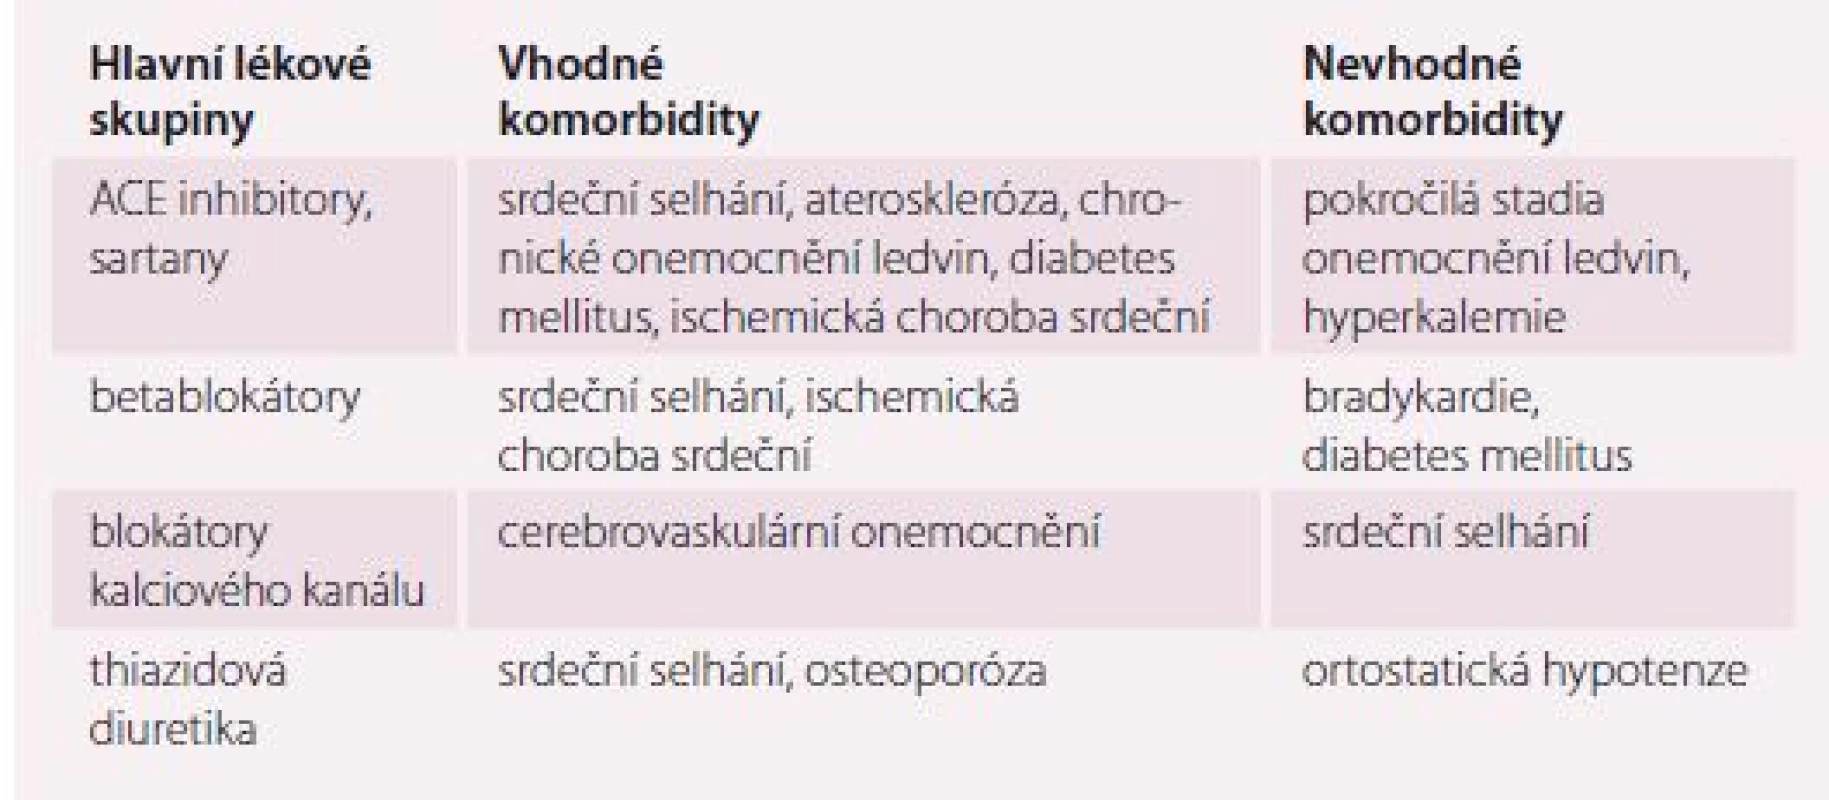 Lékové skupiny a vhodné komorbidity.